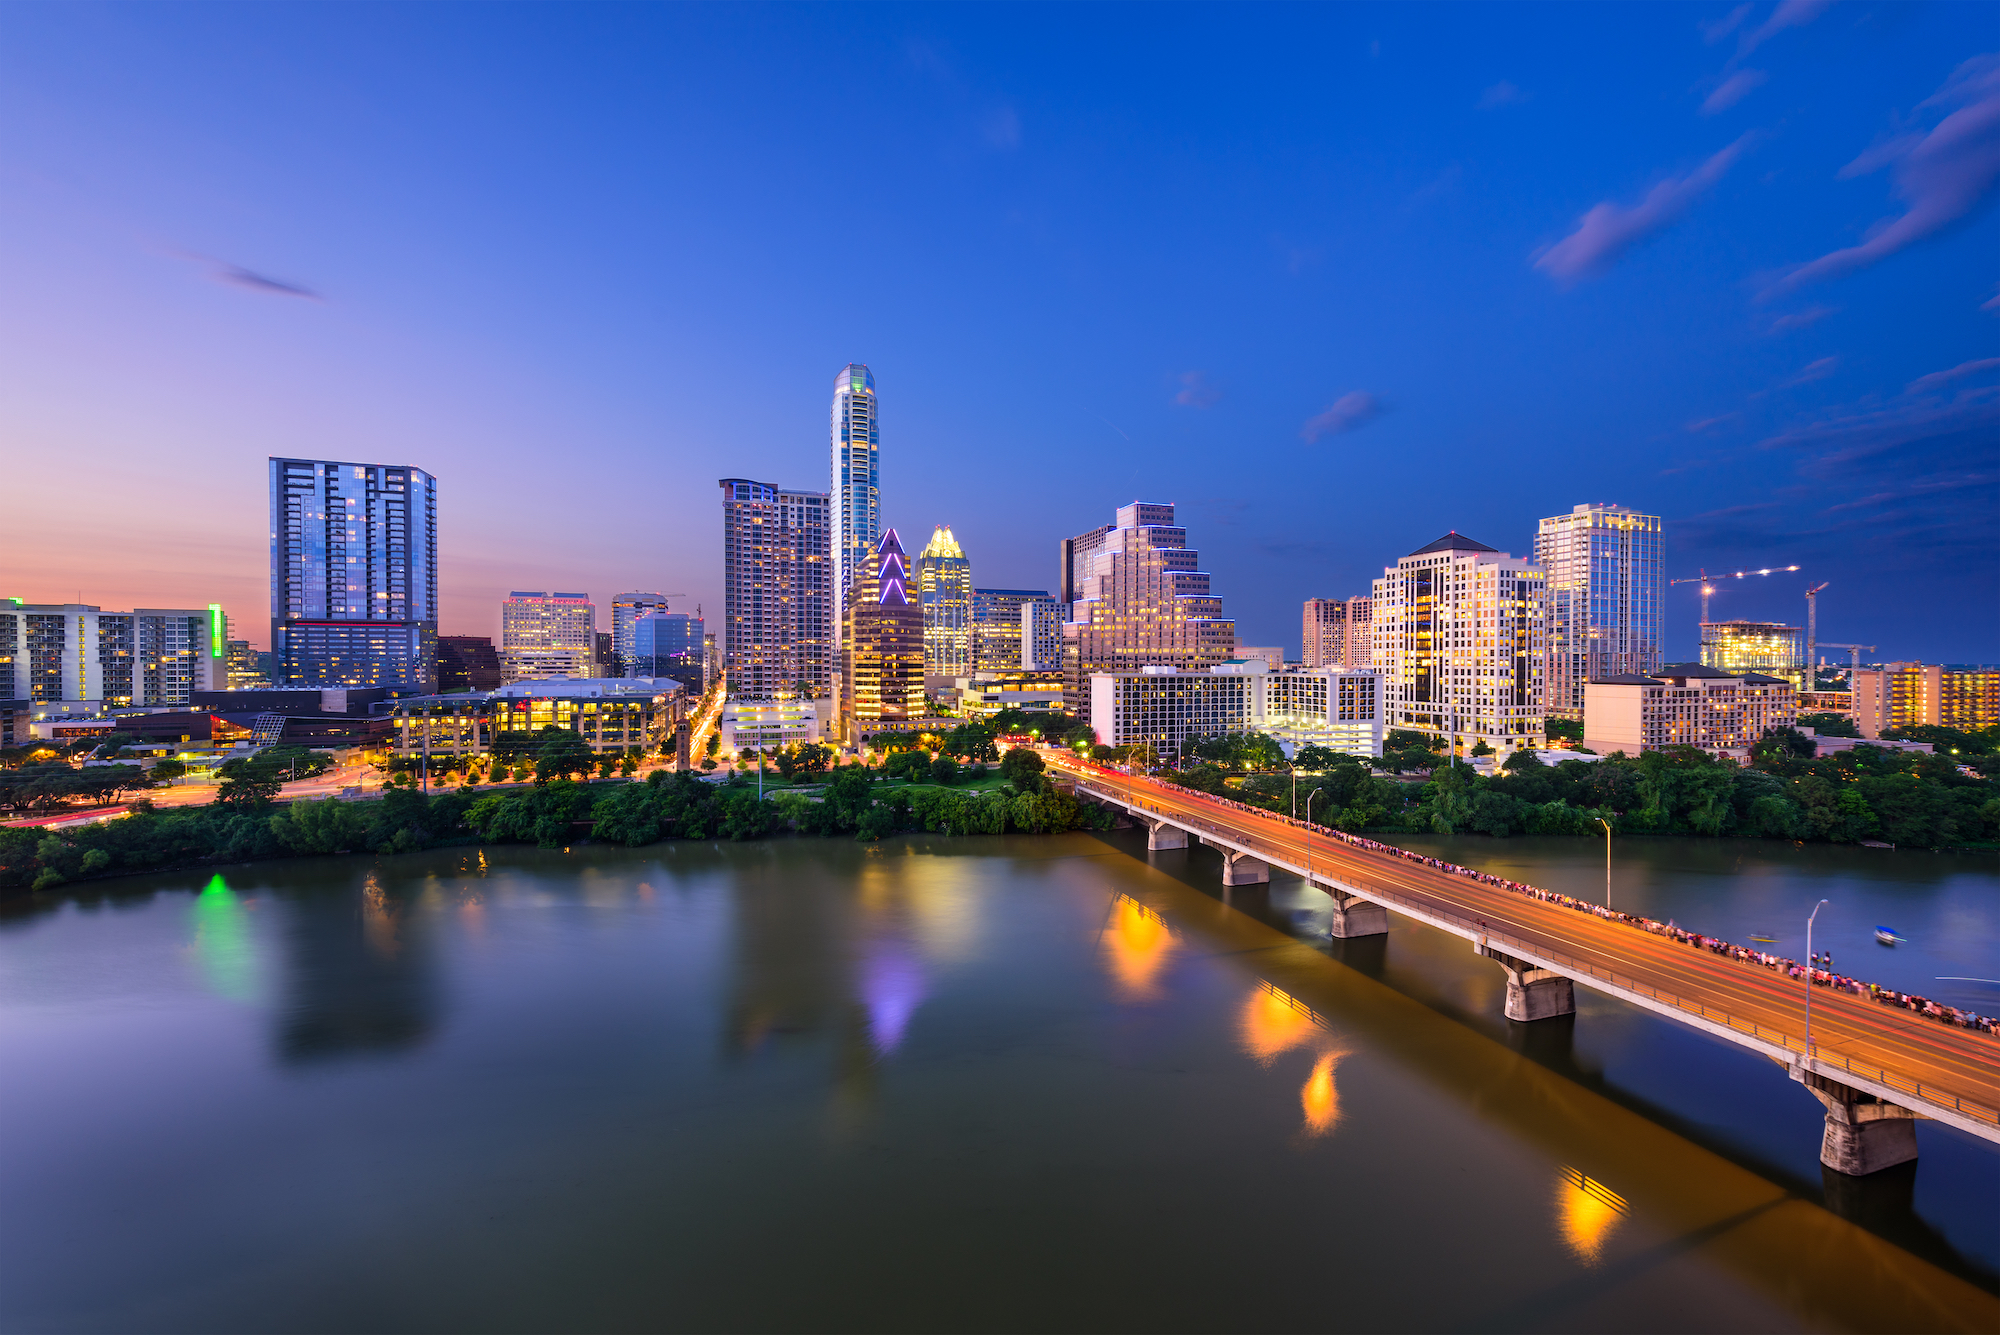 A nighttime photo of the Austin skyline.